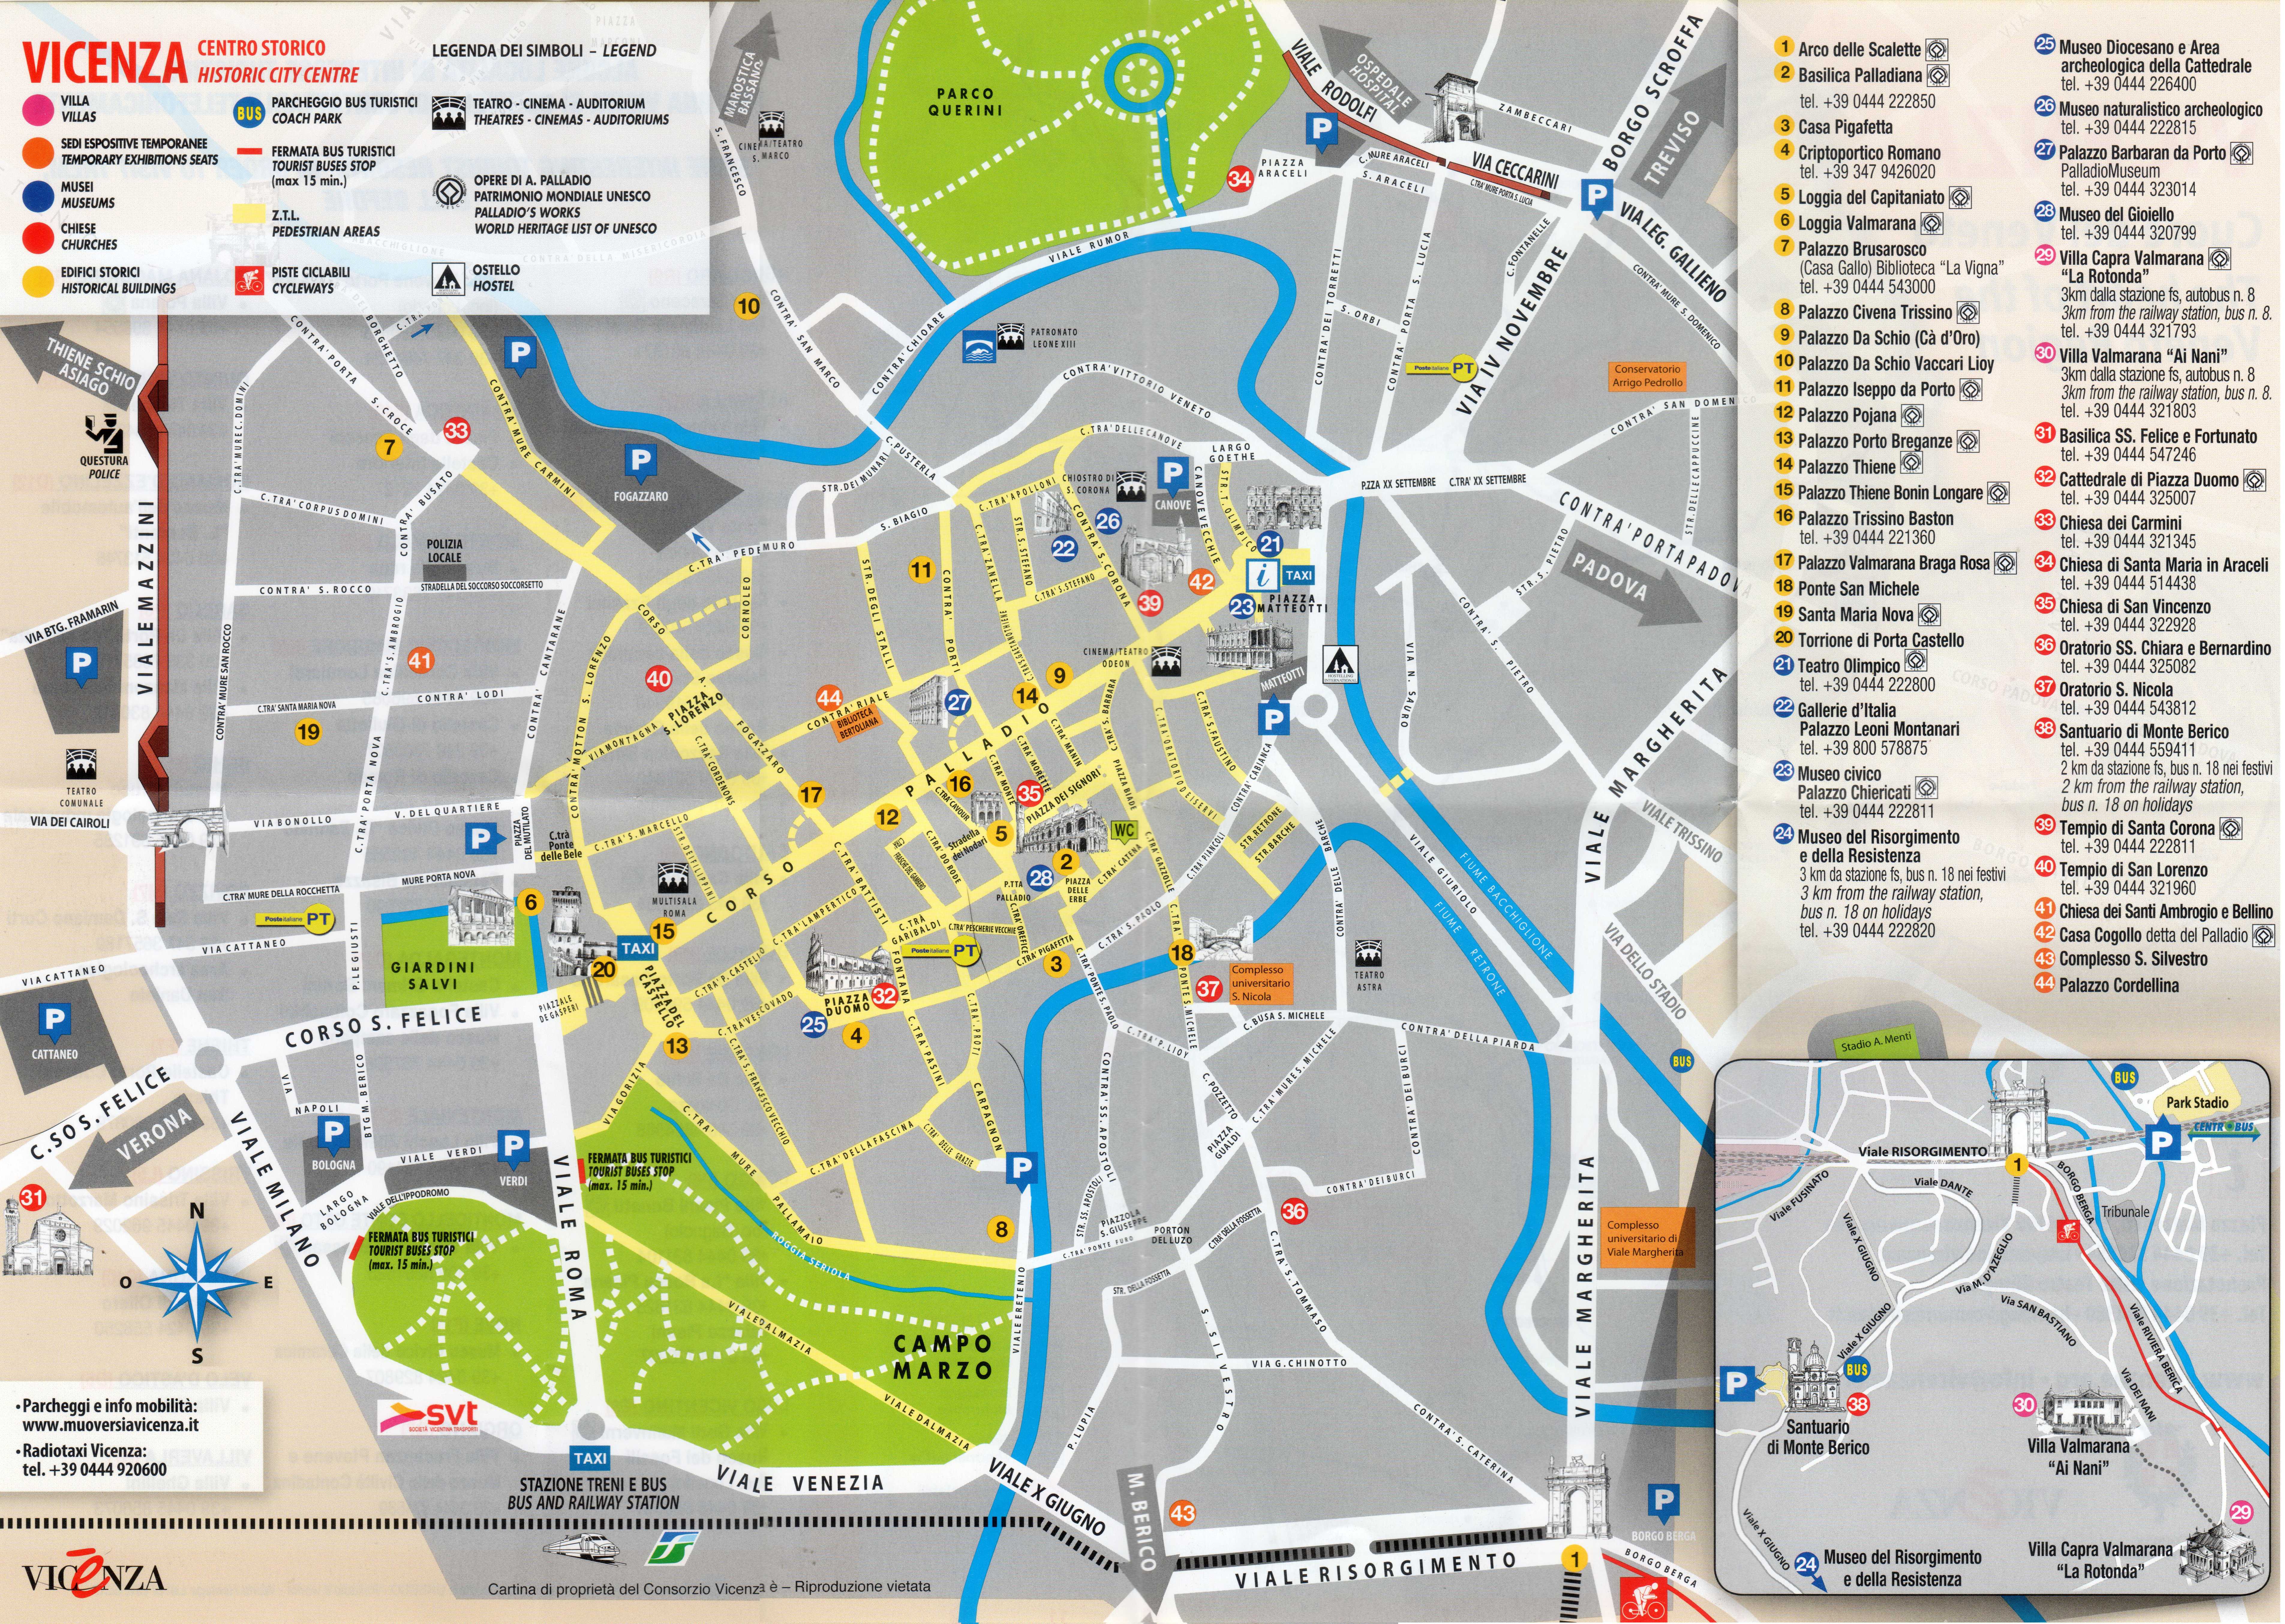 Largo antonio ghiringhelli map - centro storico, milan, italy - mapcarta